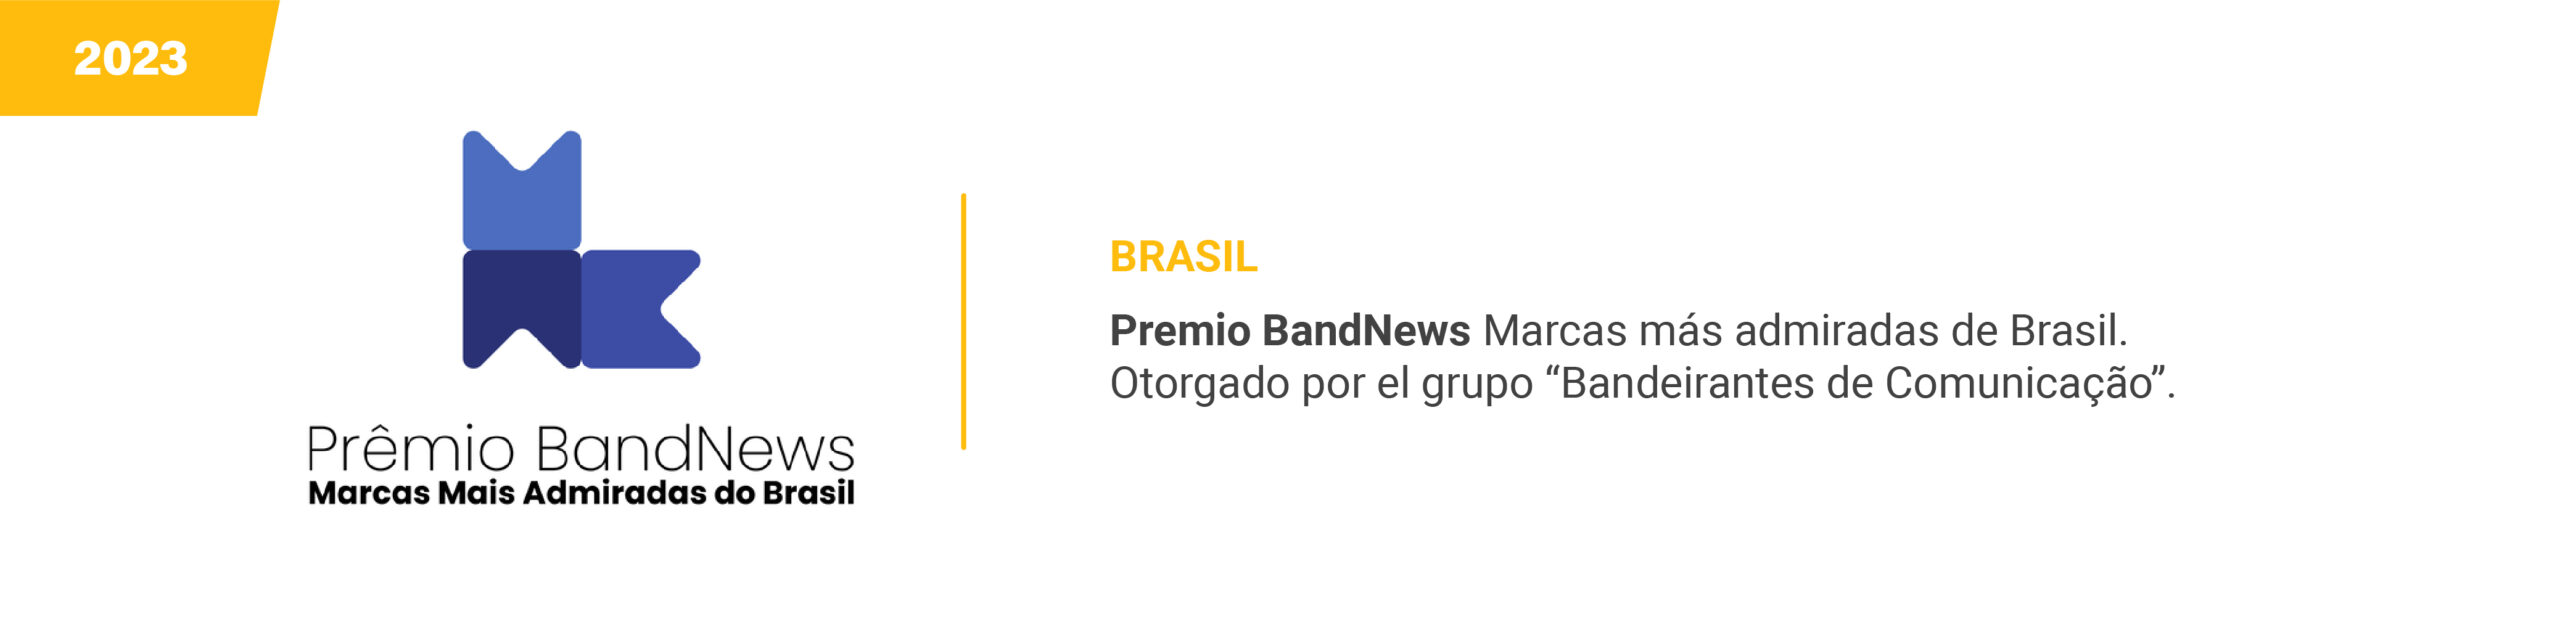 BrandNews - Brasil - 2023